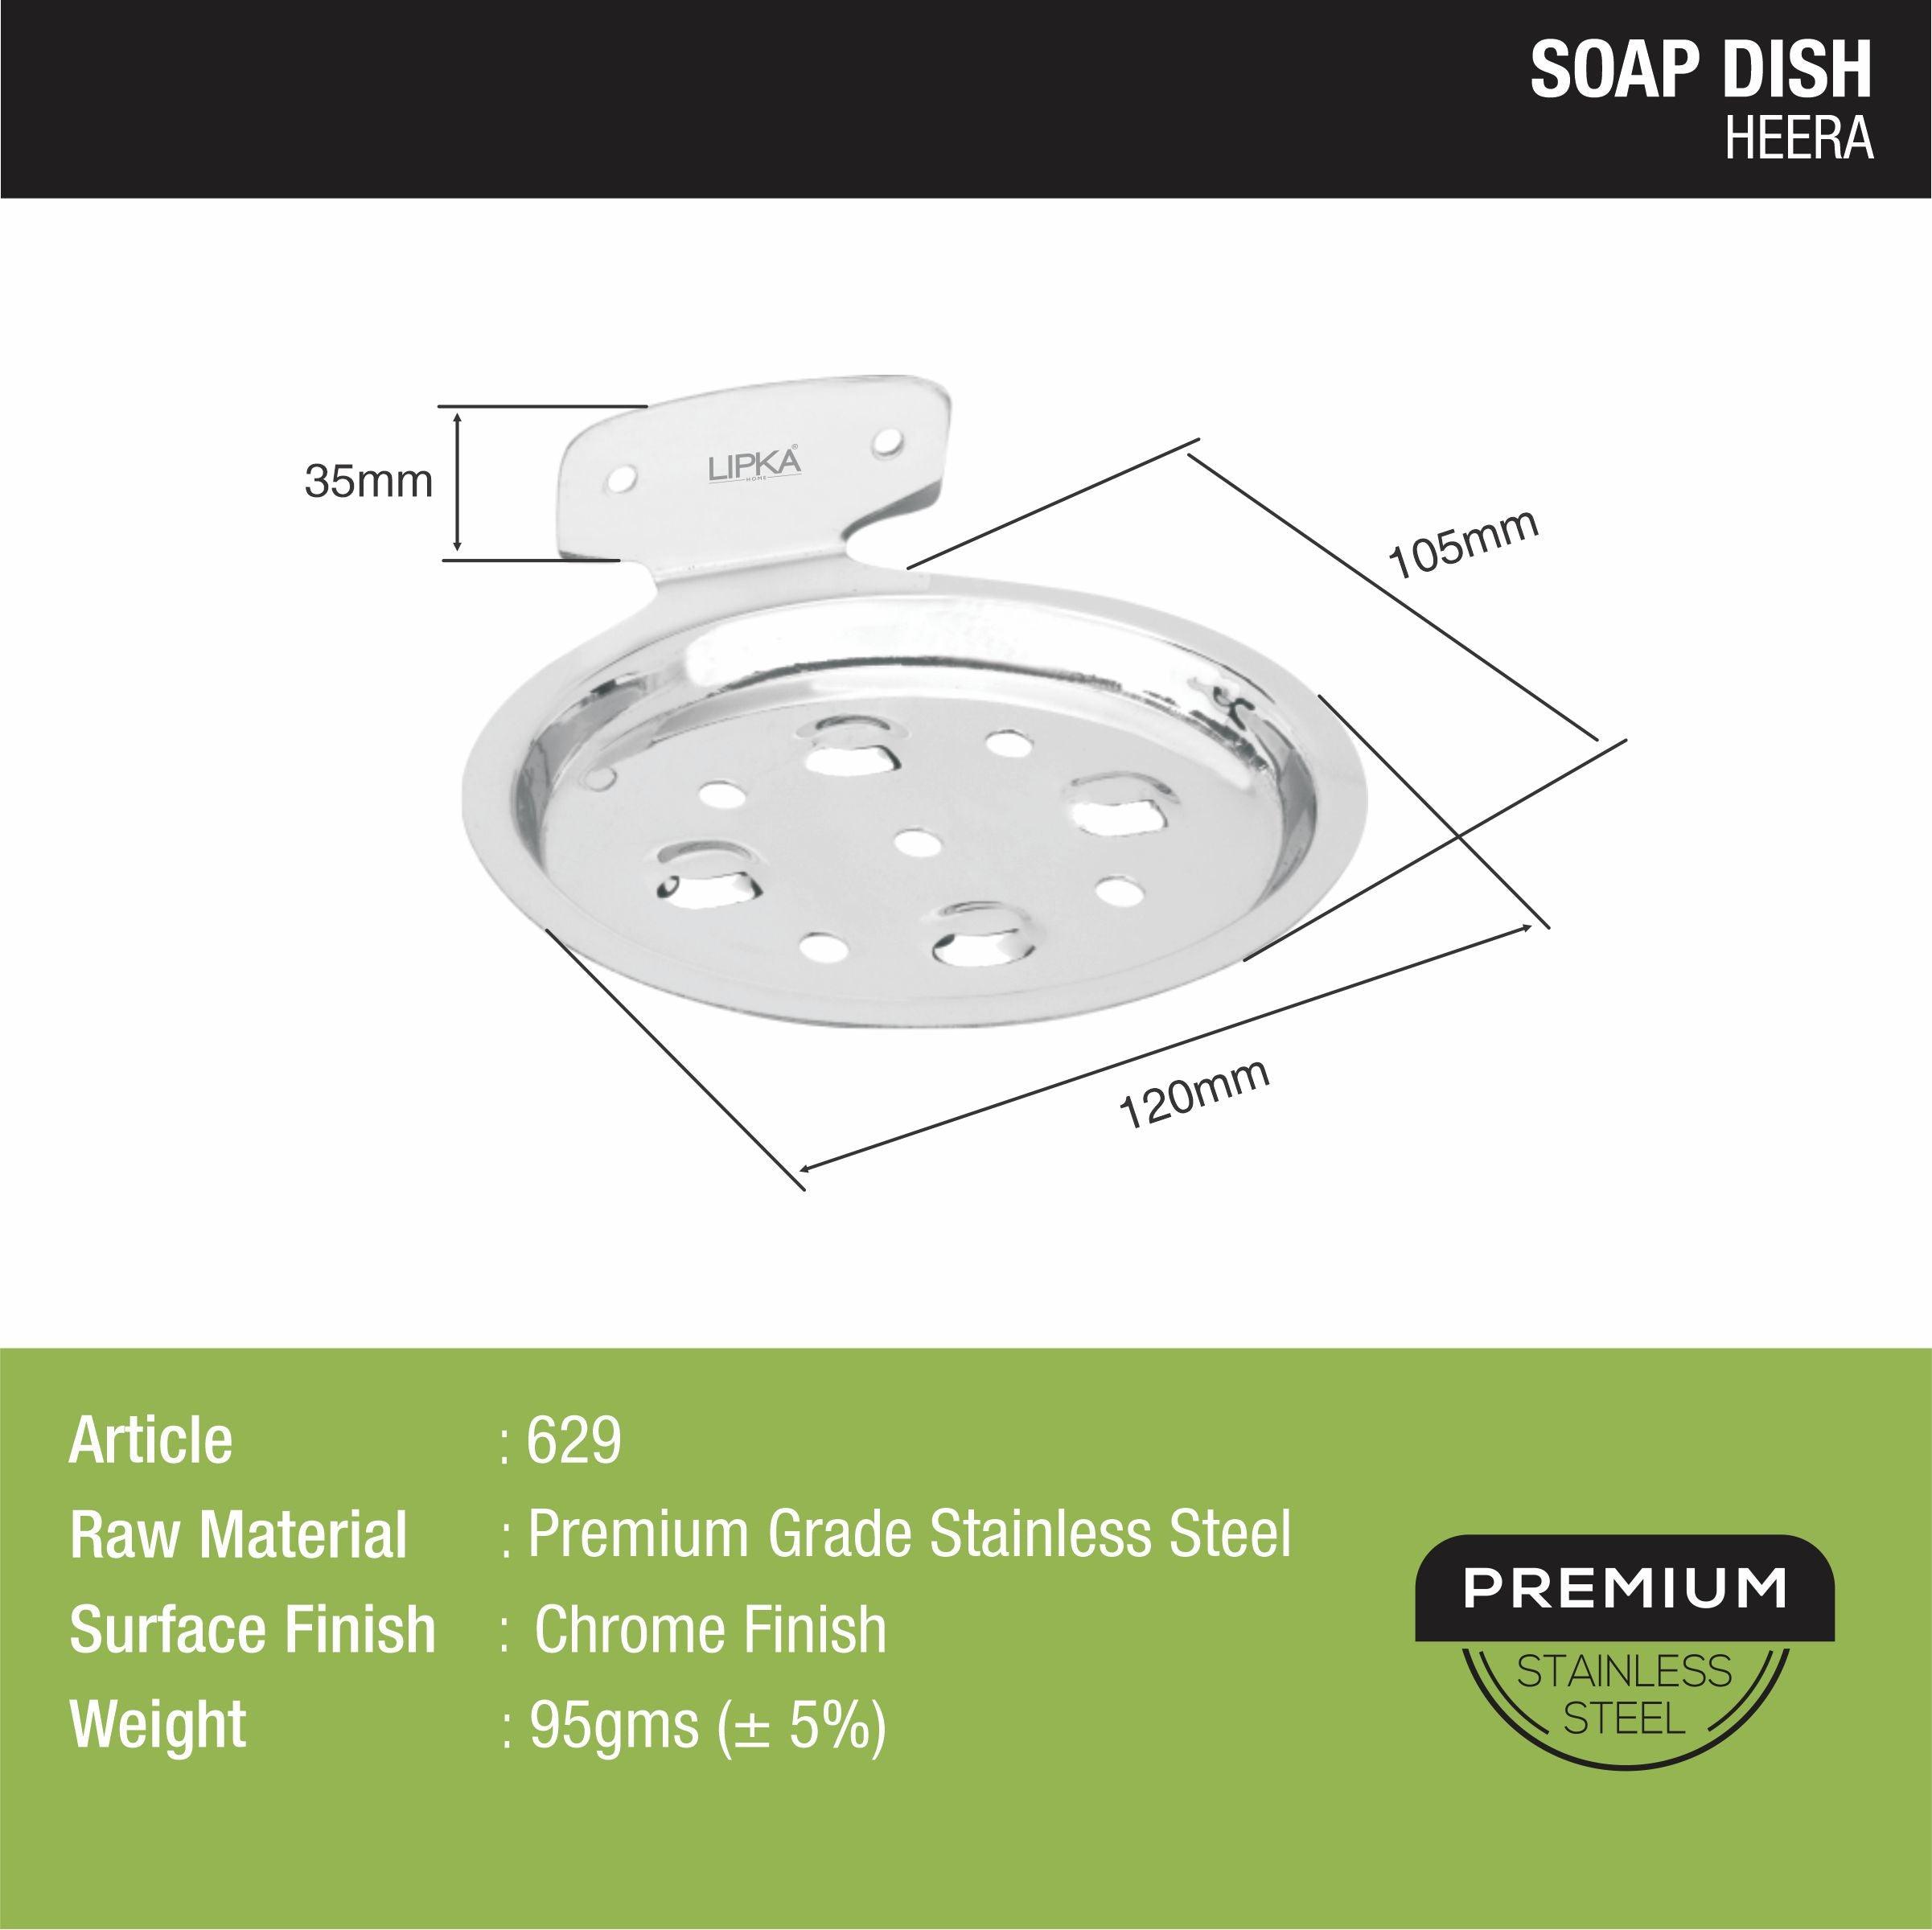 Heera Soap Dish size and dimension